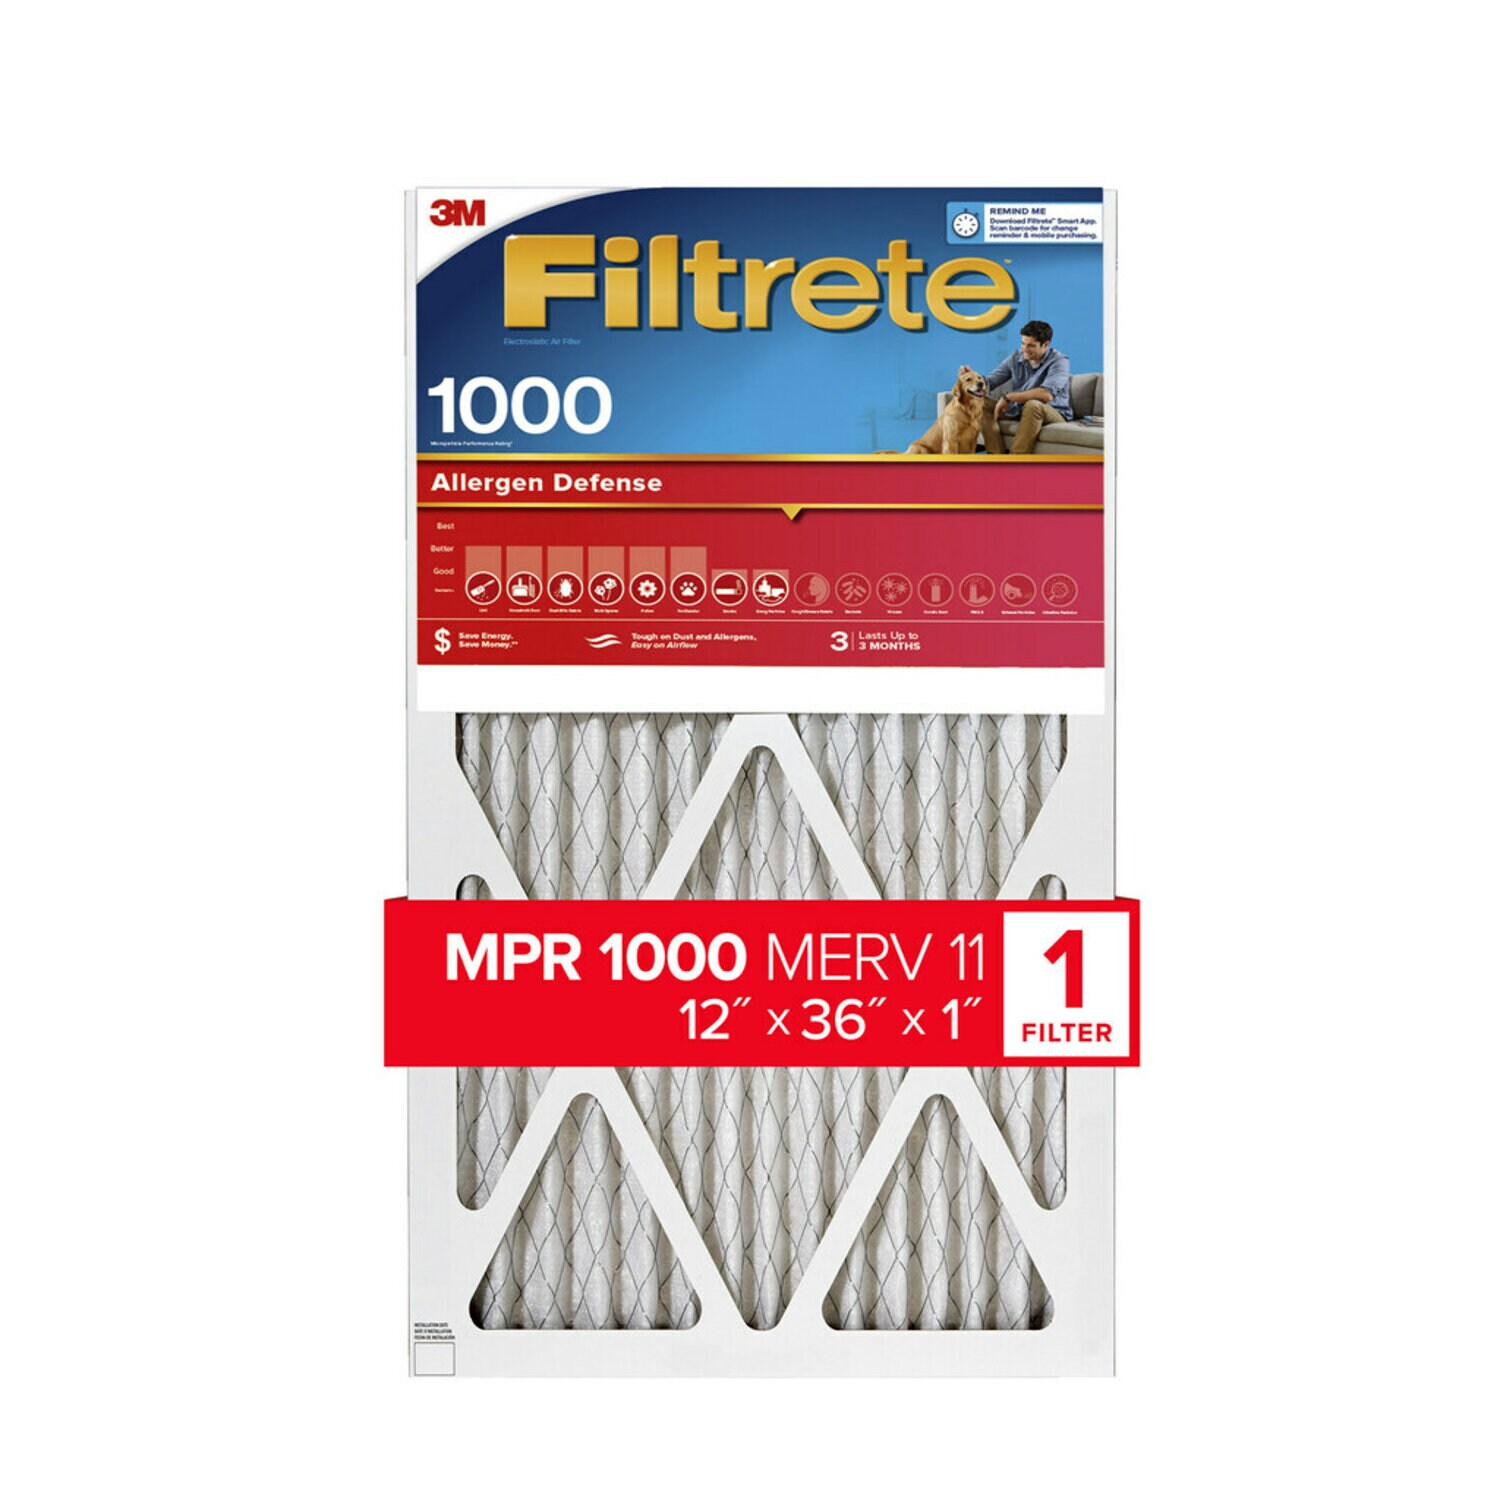 7100192559 - Filtrete Allergen Defense Air Filter, 1000 MPR, AL14-4, 12 in x 36 in x
1 in (30,4 cm x 91,4 cm x 2,5 cm)